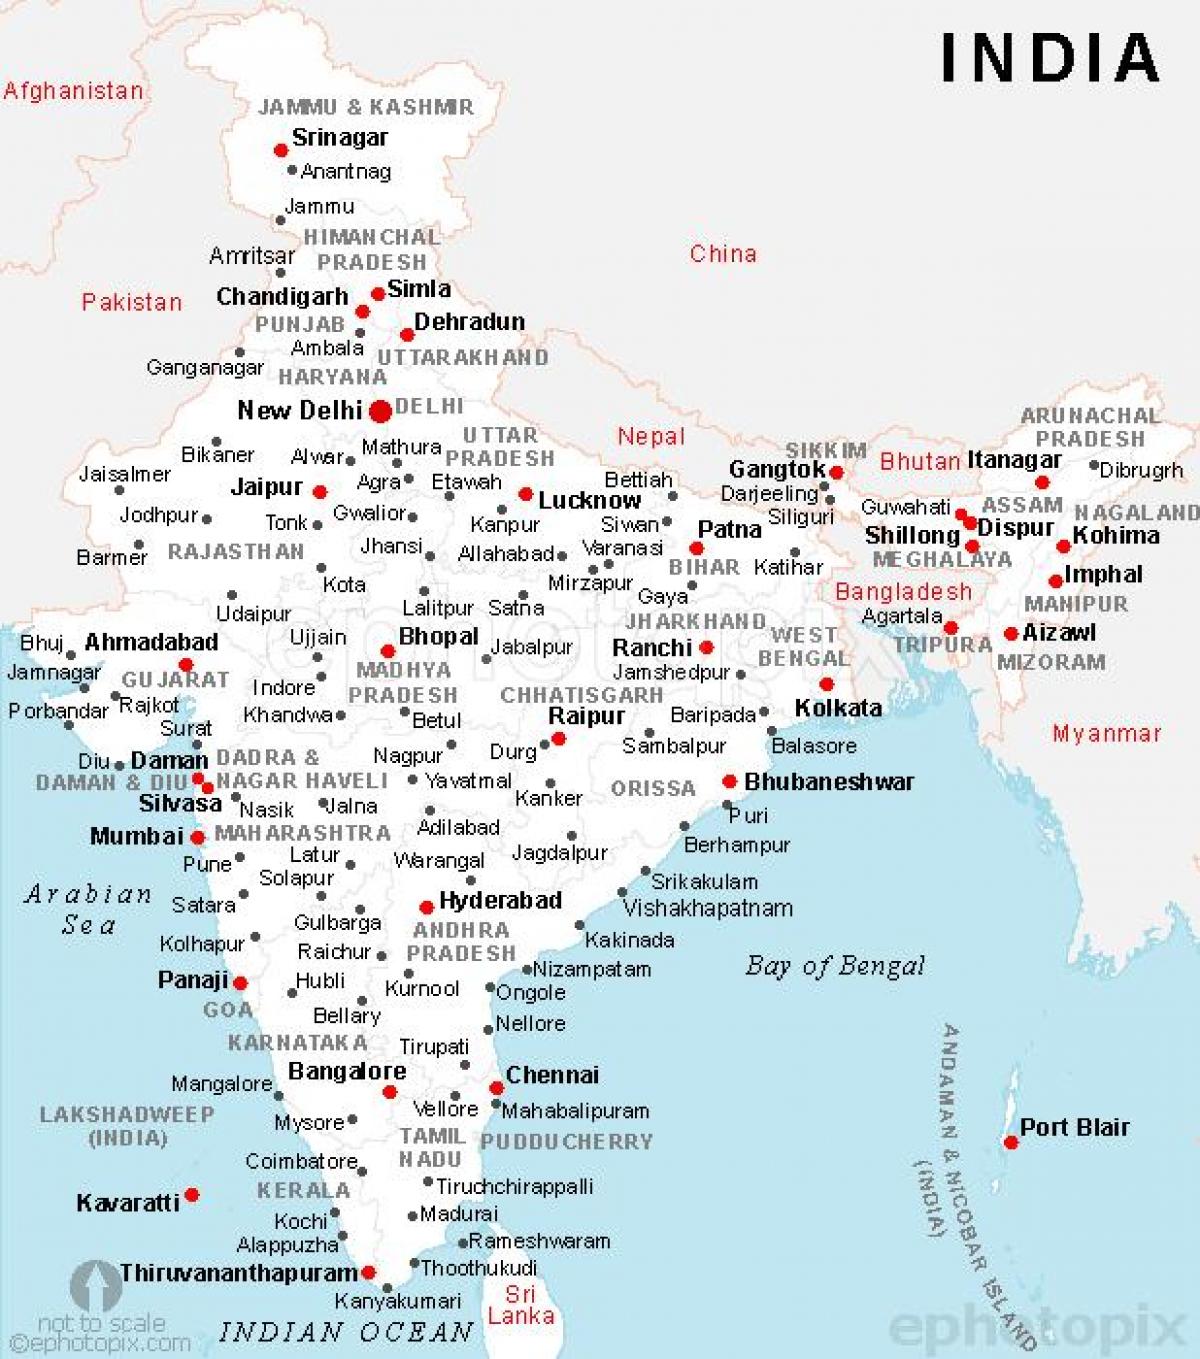 Indie mapu s městy